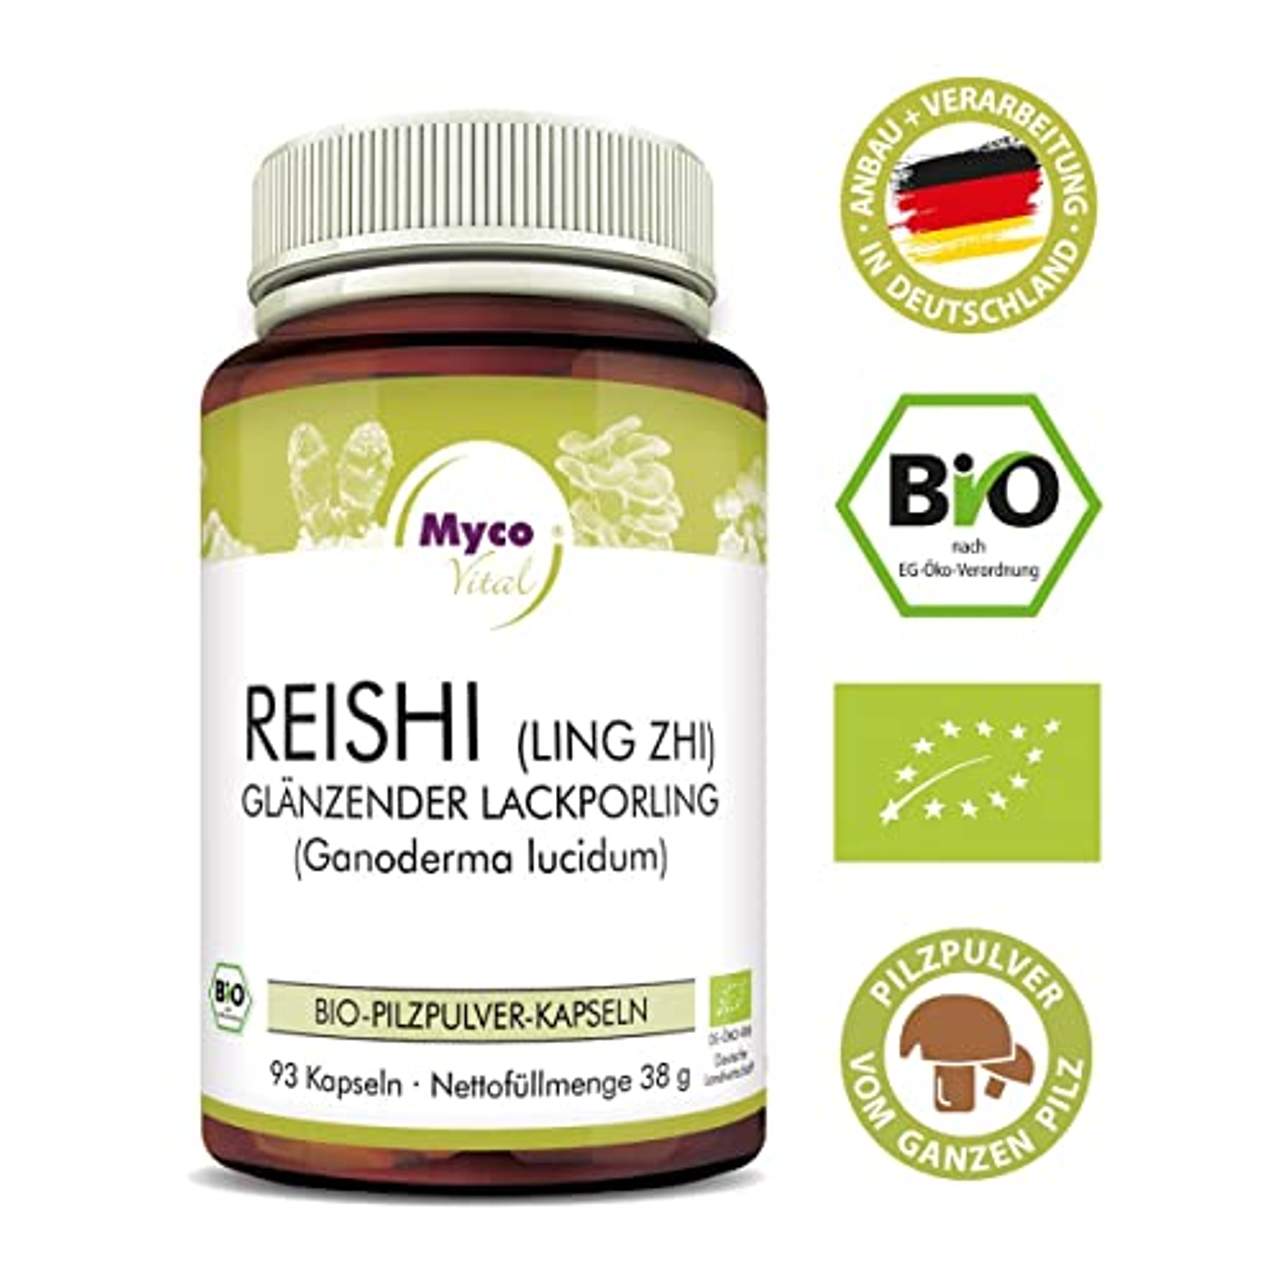 MycoVital Bio Reishi Pilzpulver-Kapseln 93 Stück je 400 mg aus deutschem Anbau